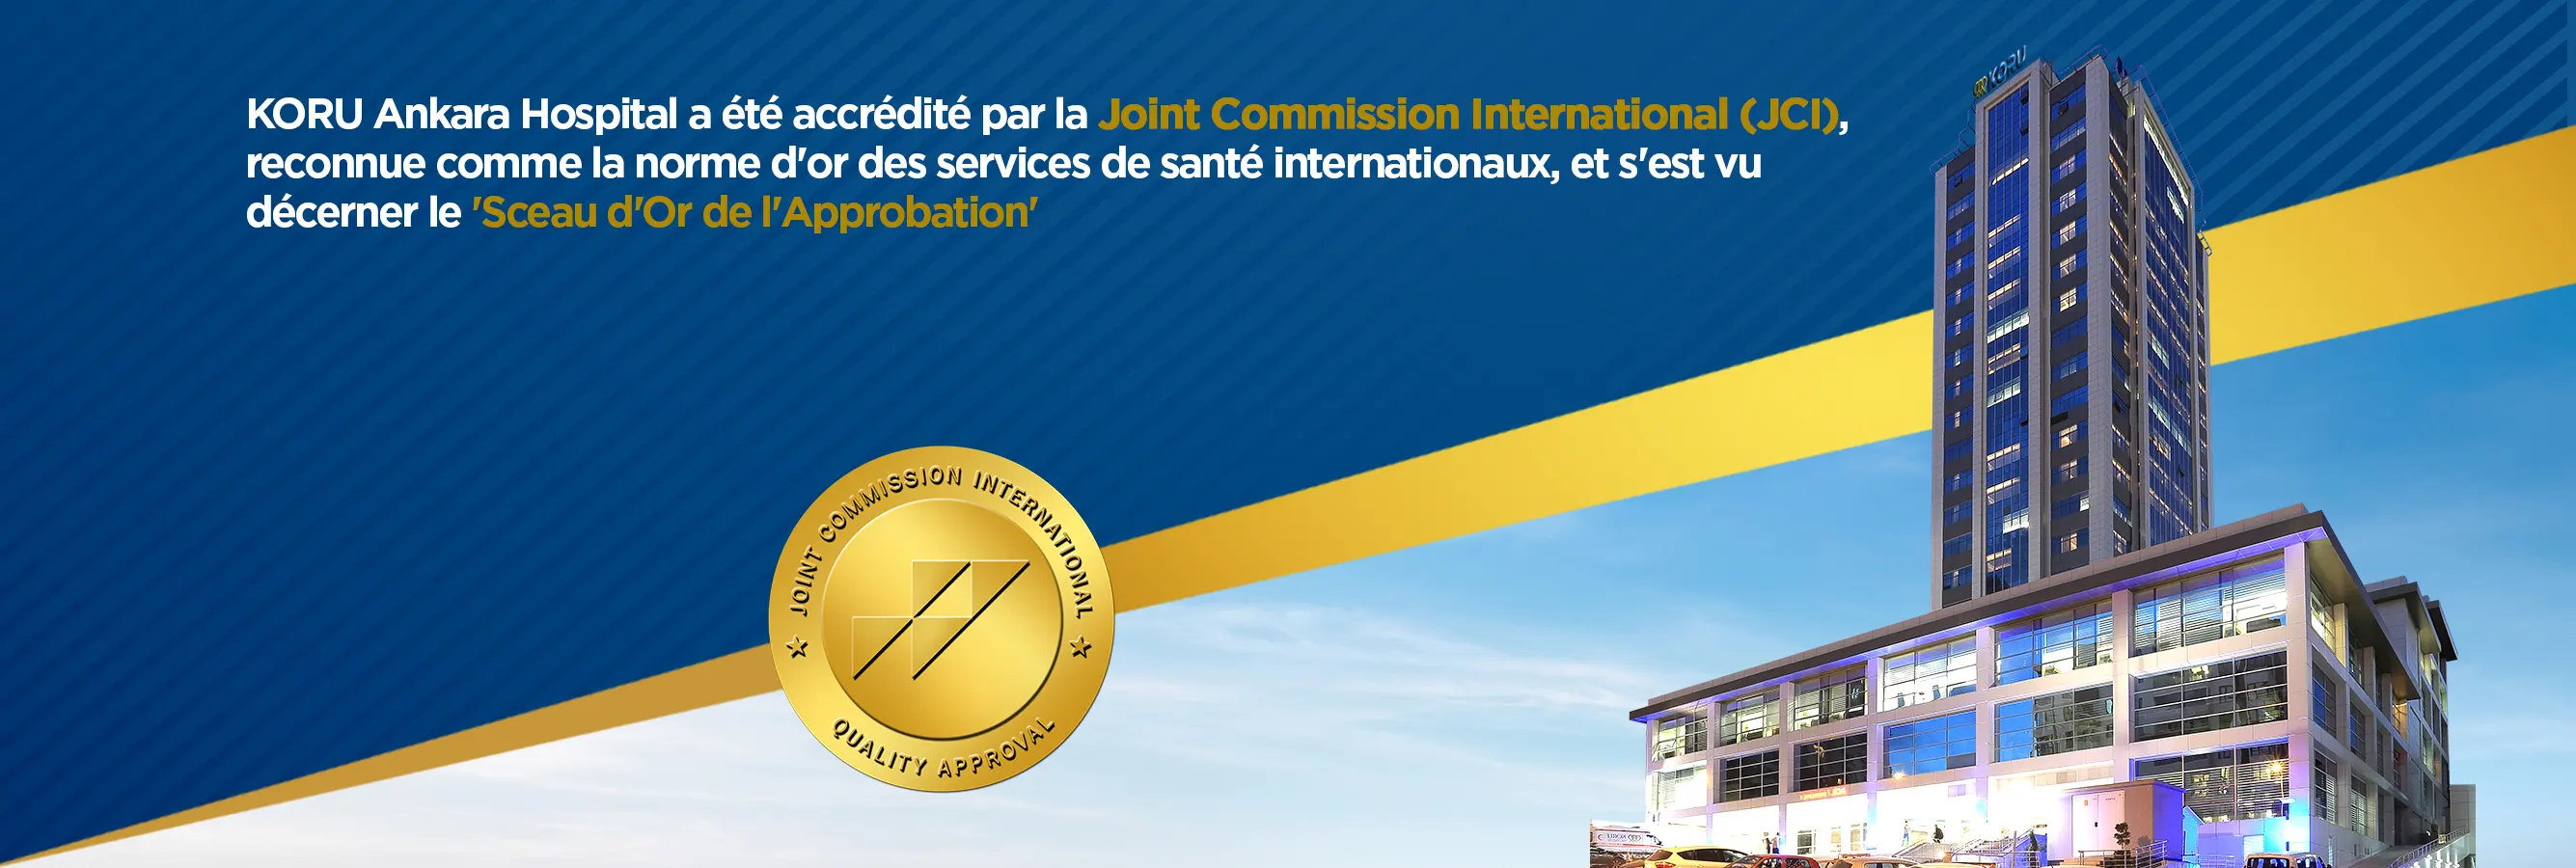 JCI (Joint Commission International) - FR